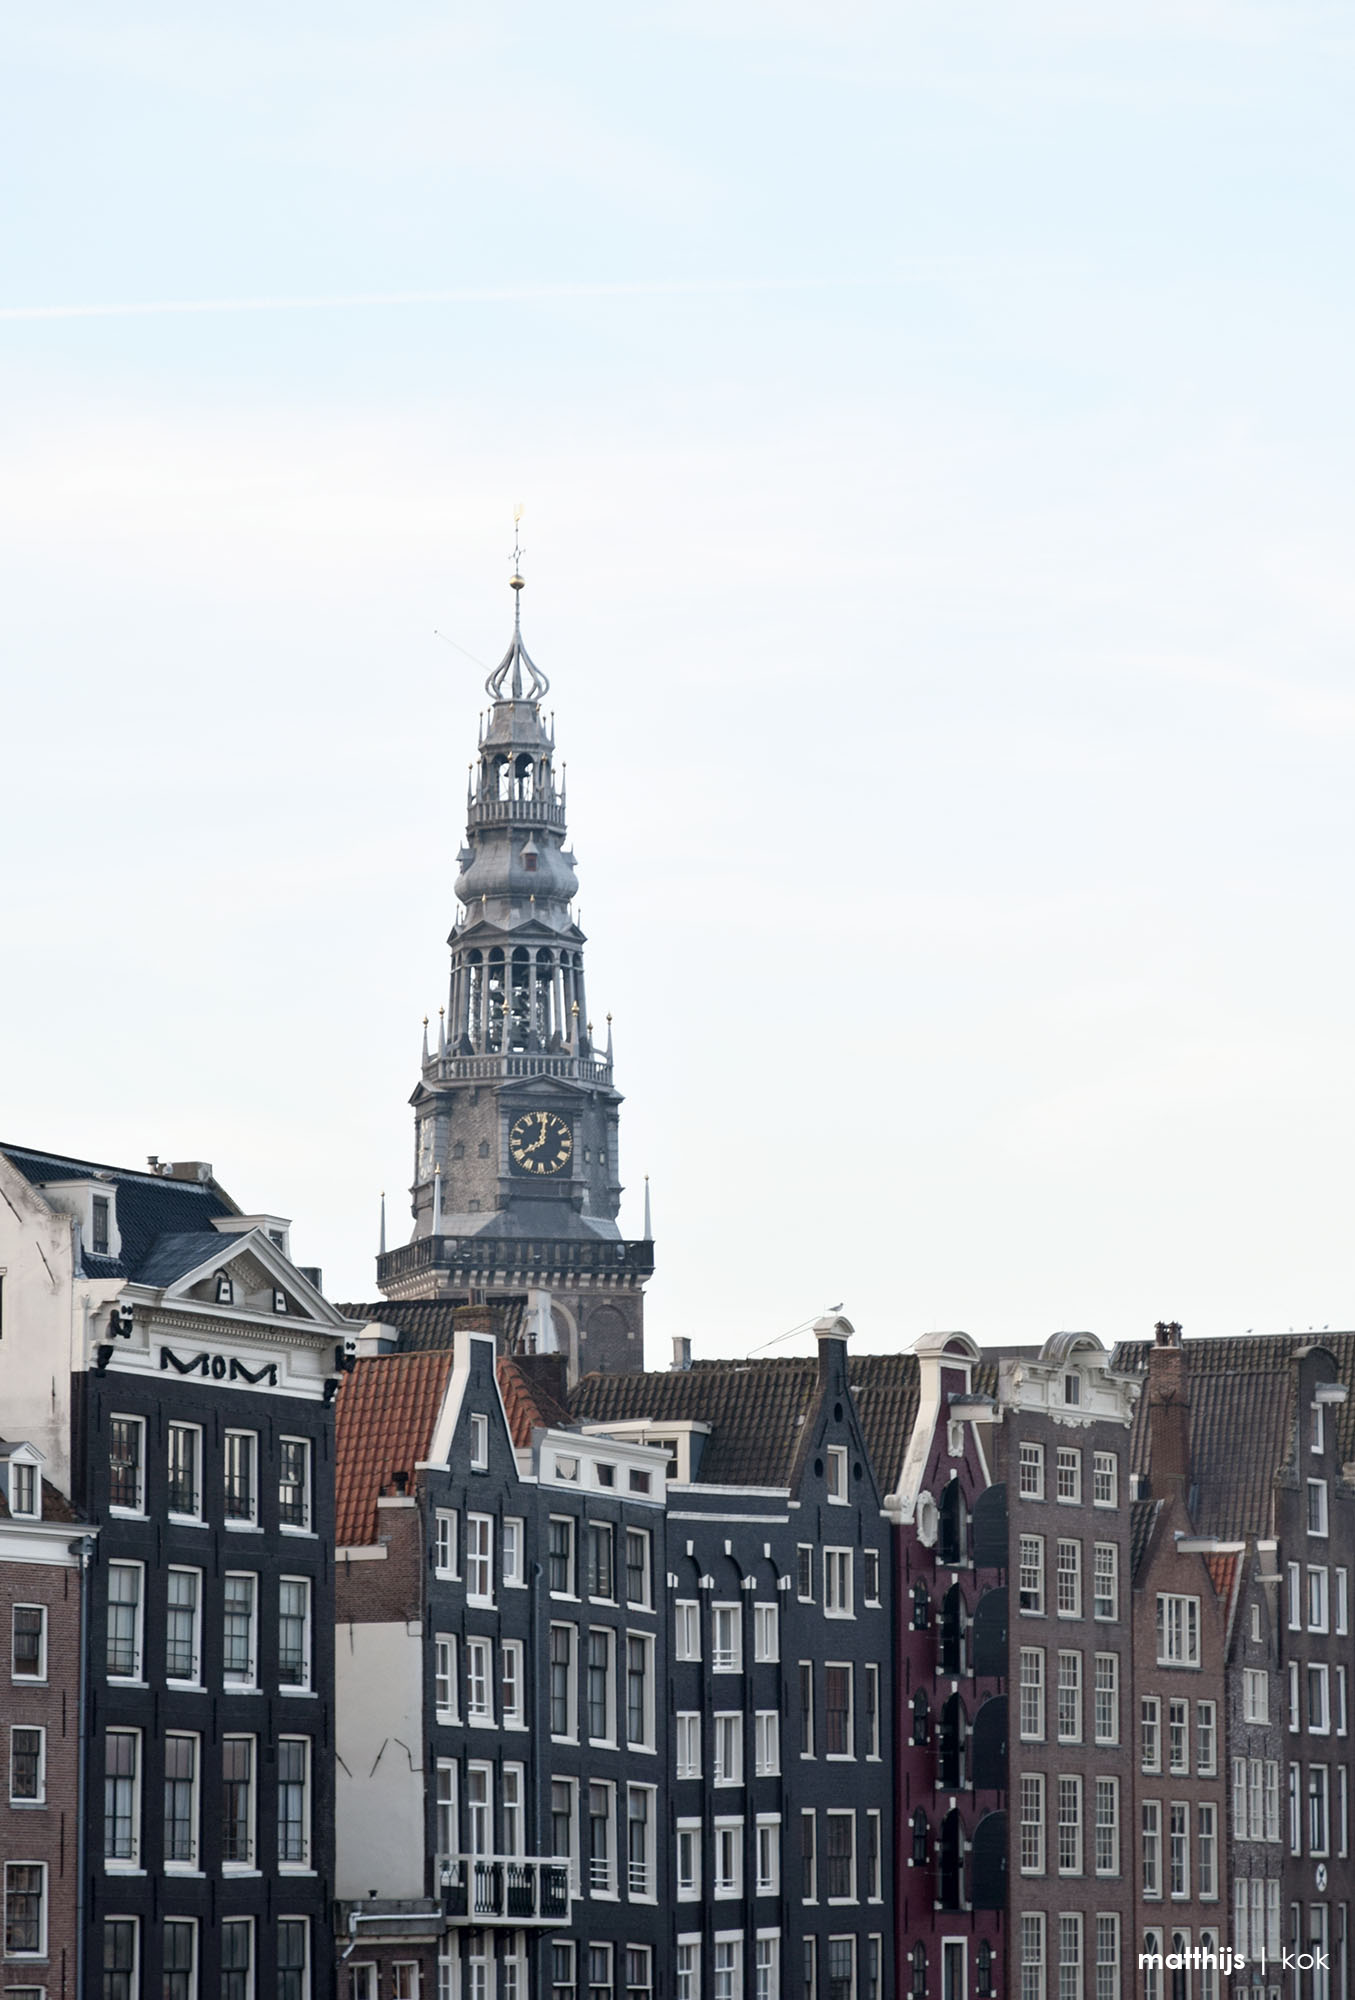 Oude Kerk with Damrak, Amsterdam, The Netherlands | Photo by Matthijs Kok